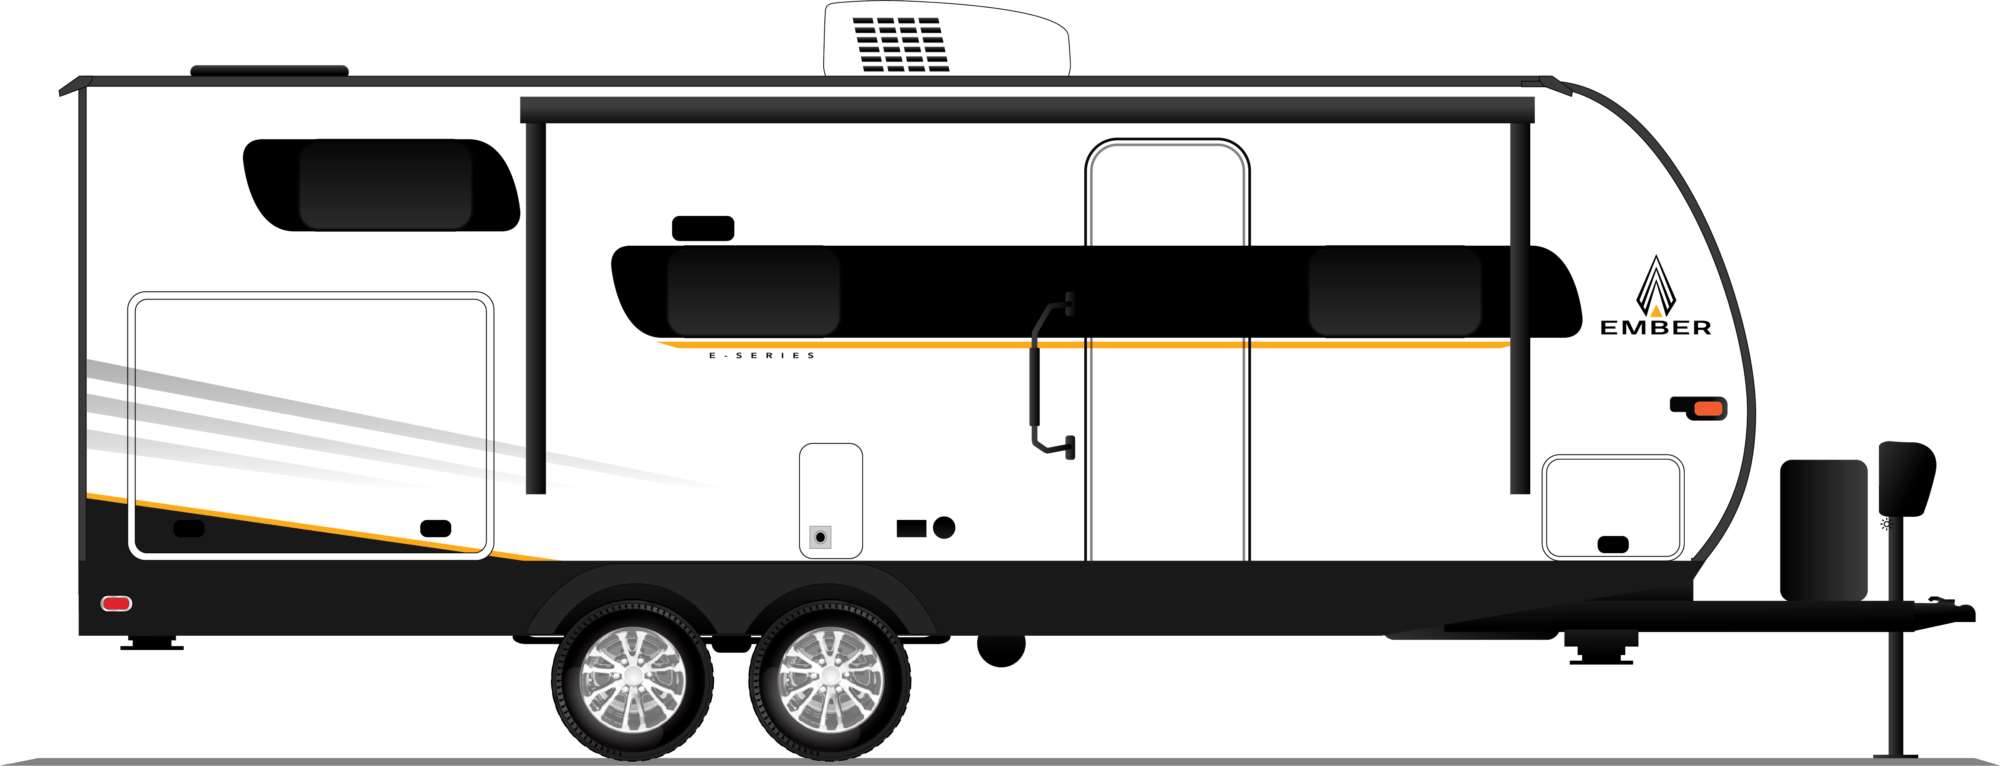 off grid travel trailer